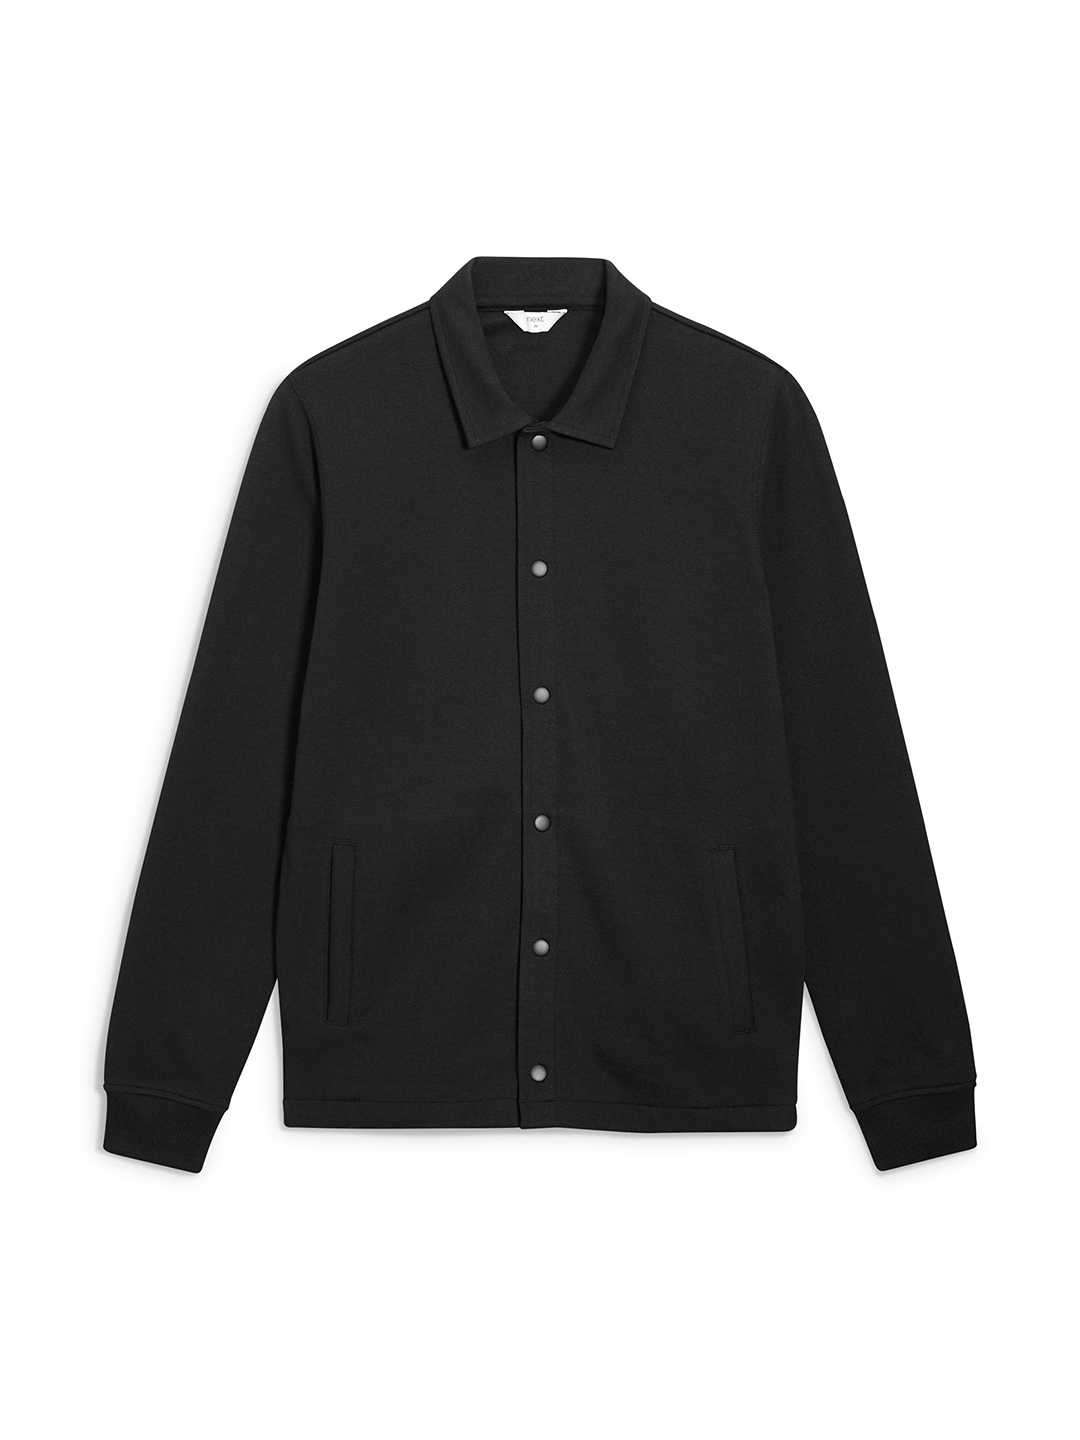 Buy Next Men Black Solid Tailored Jacket - Jackets for Men 1900150 | Myntra